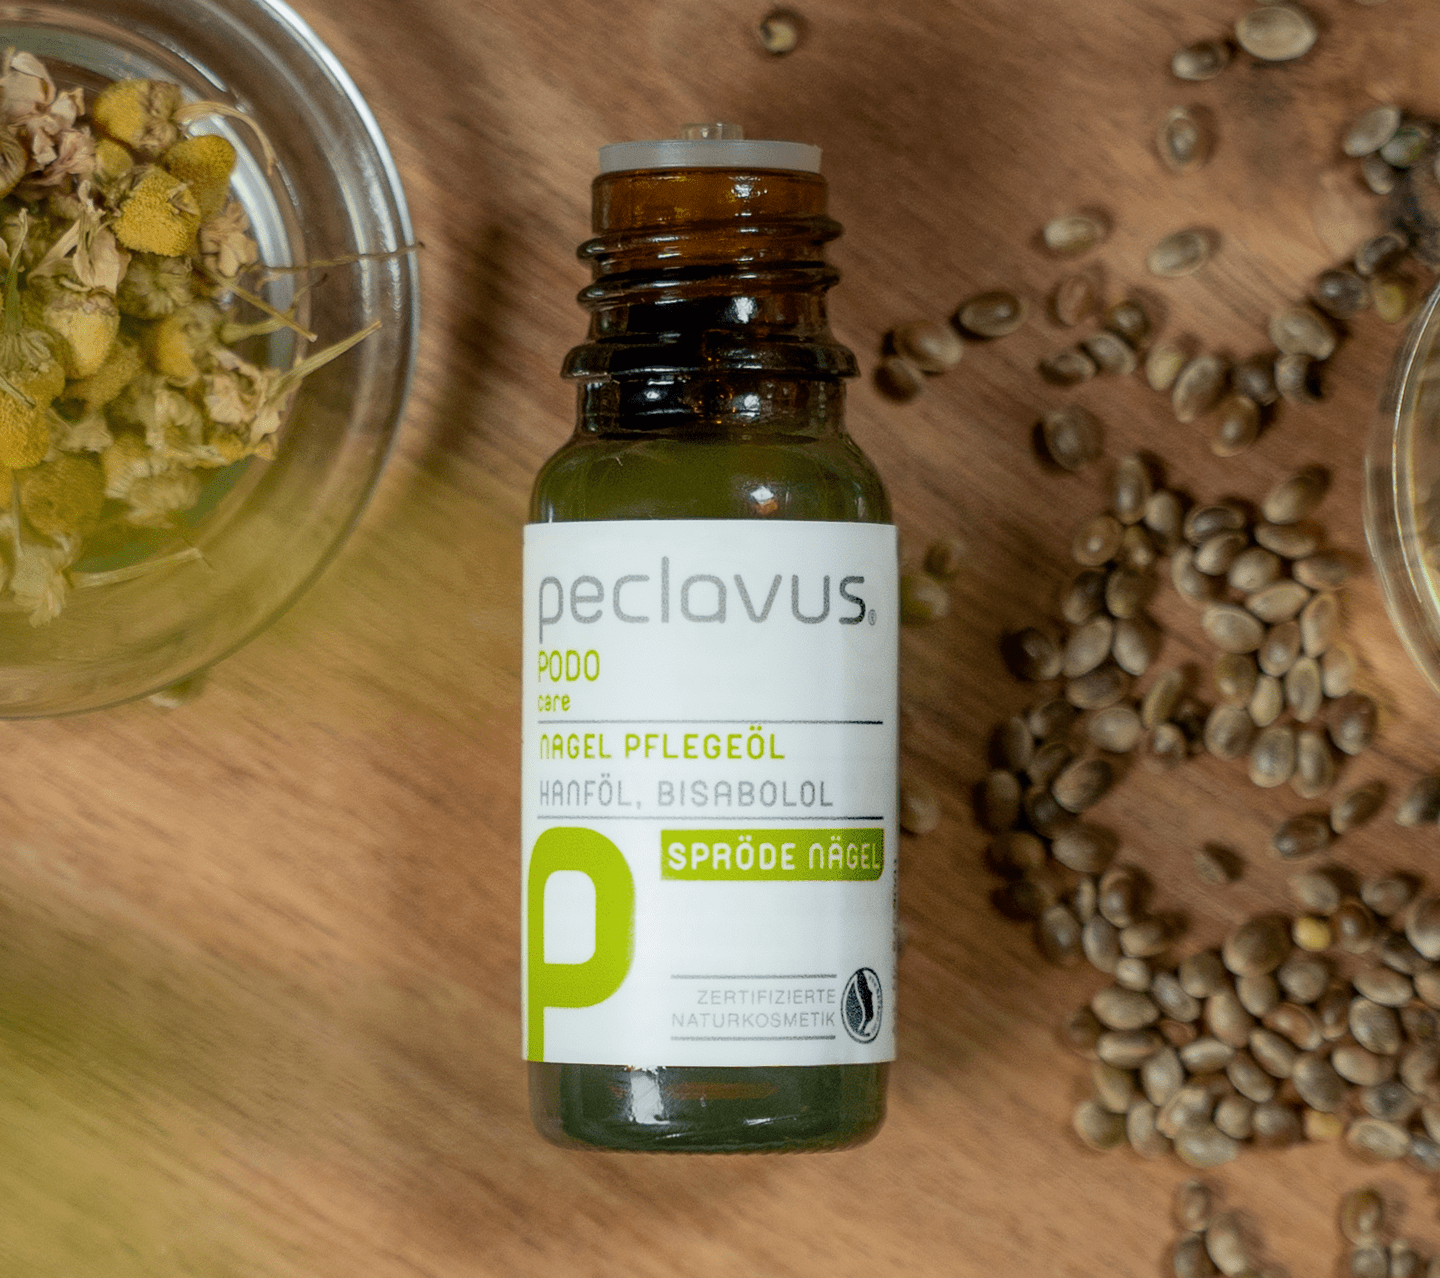 peclavus - Nagel Pflegeöl, 10 ml